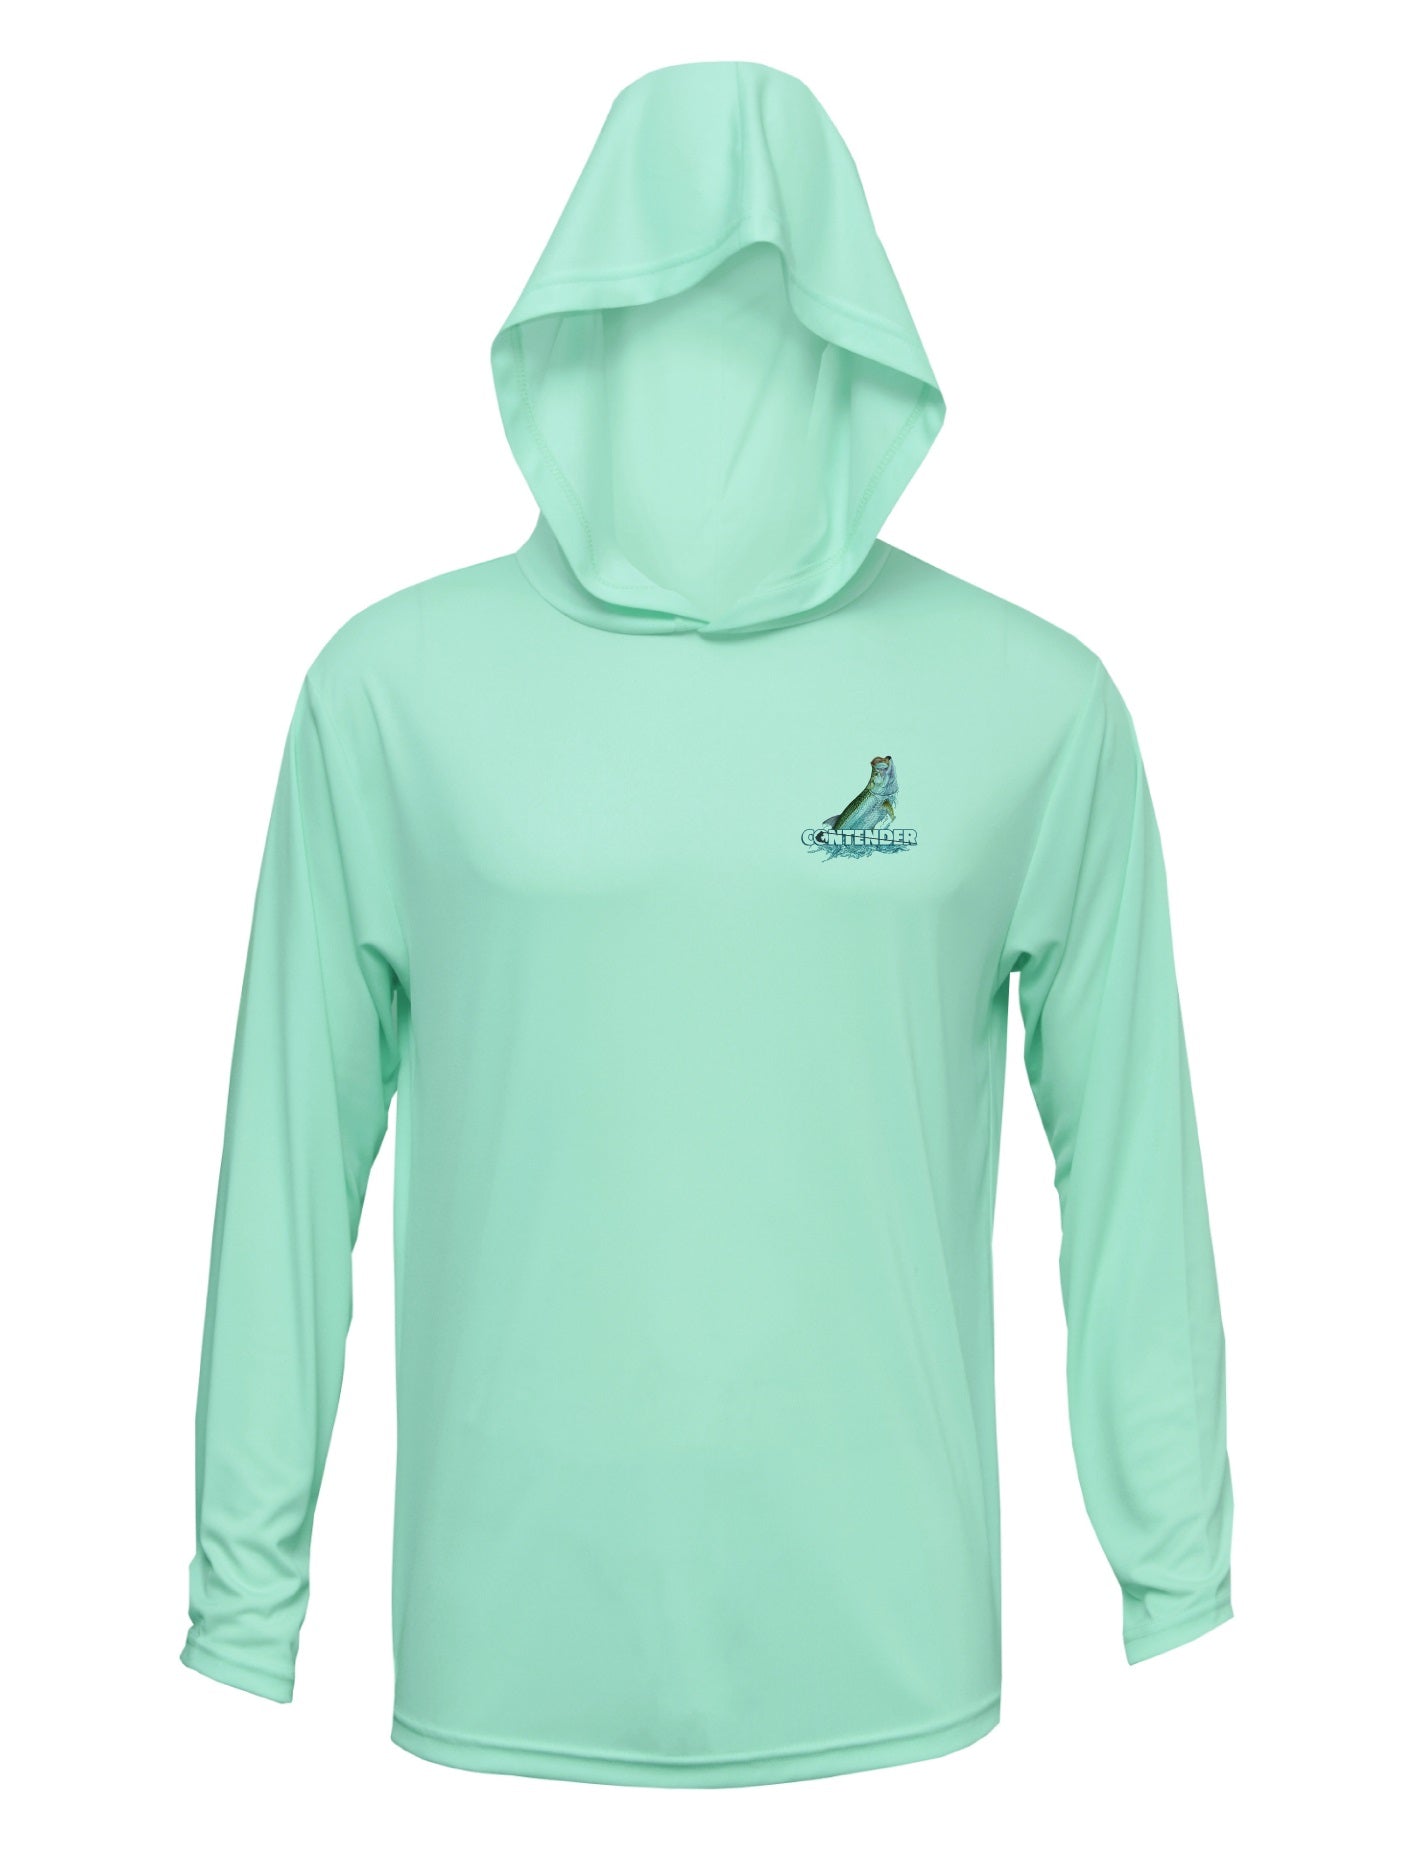 Contender 26 Bay Seafoam Long Sleeve Hooded Performance Shirt